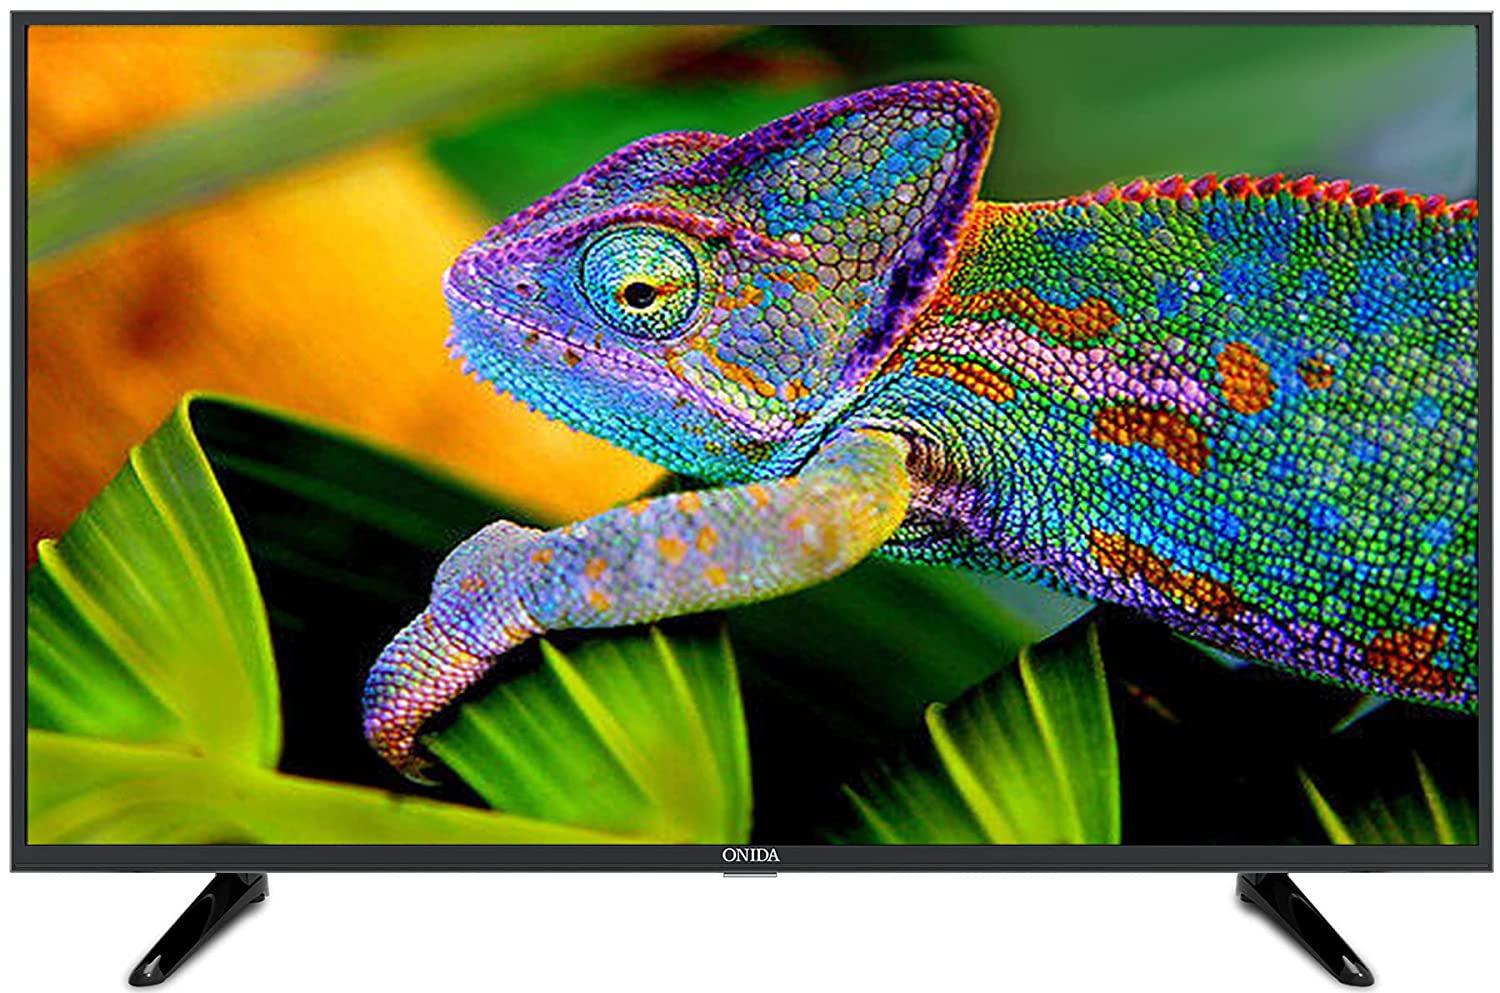 Onida Full HD Smart IPS LED TV